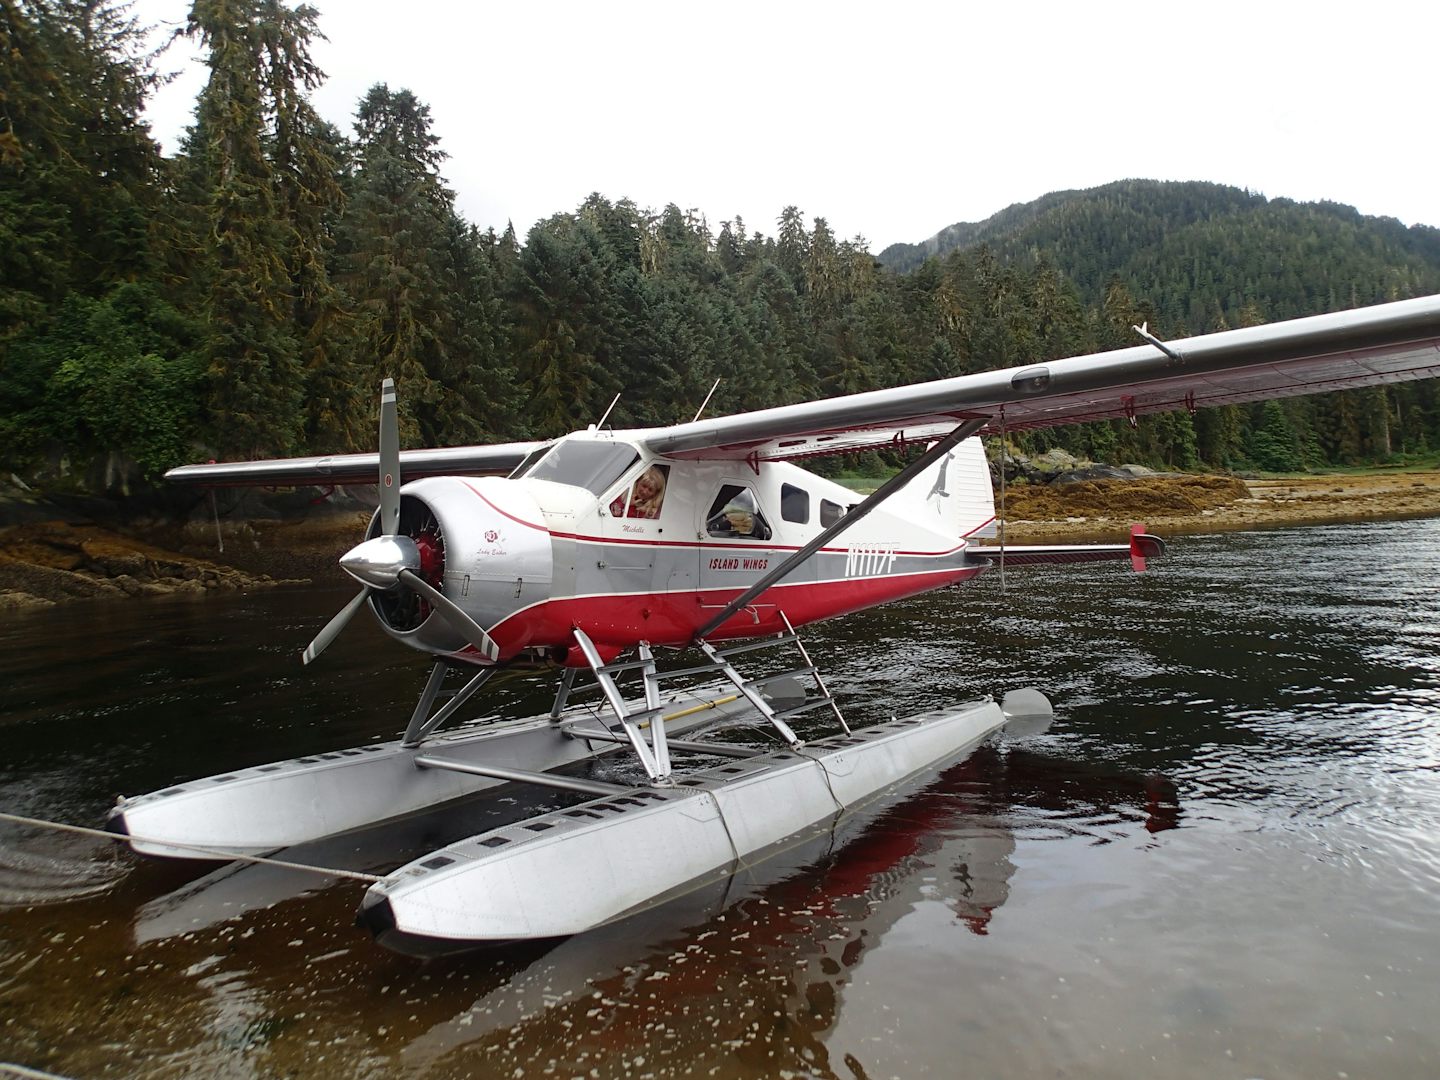 Arriving at Anan Creek via float plane.